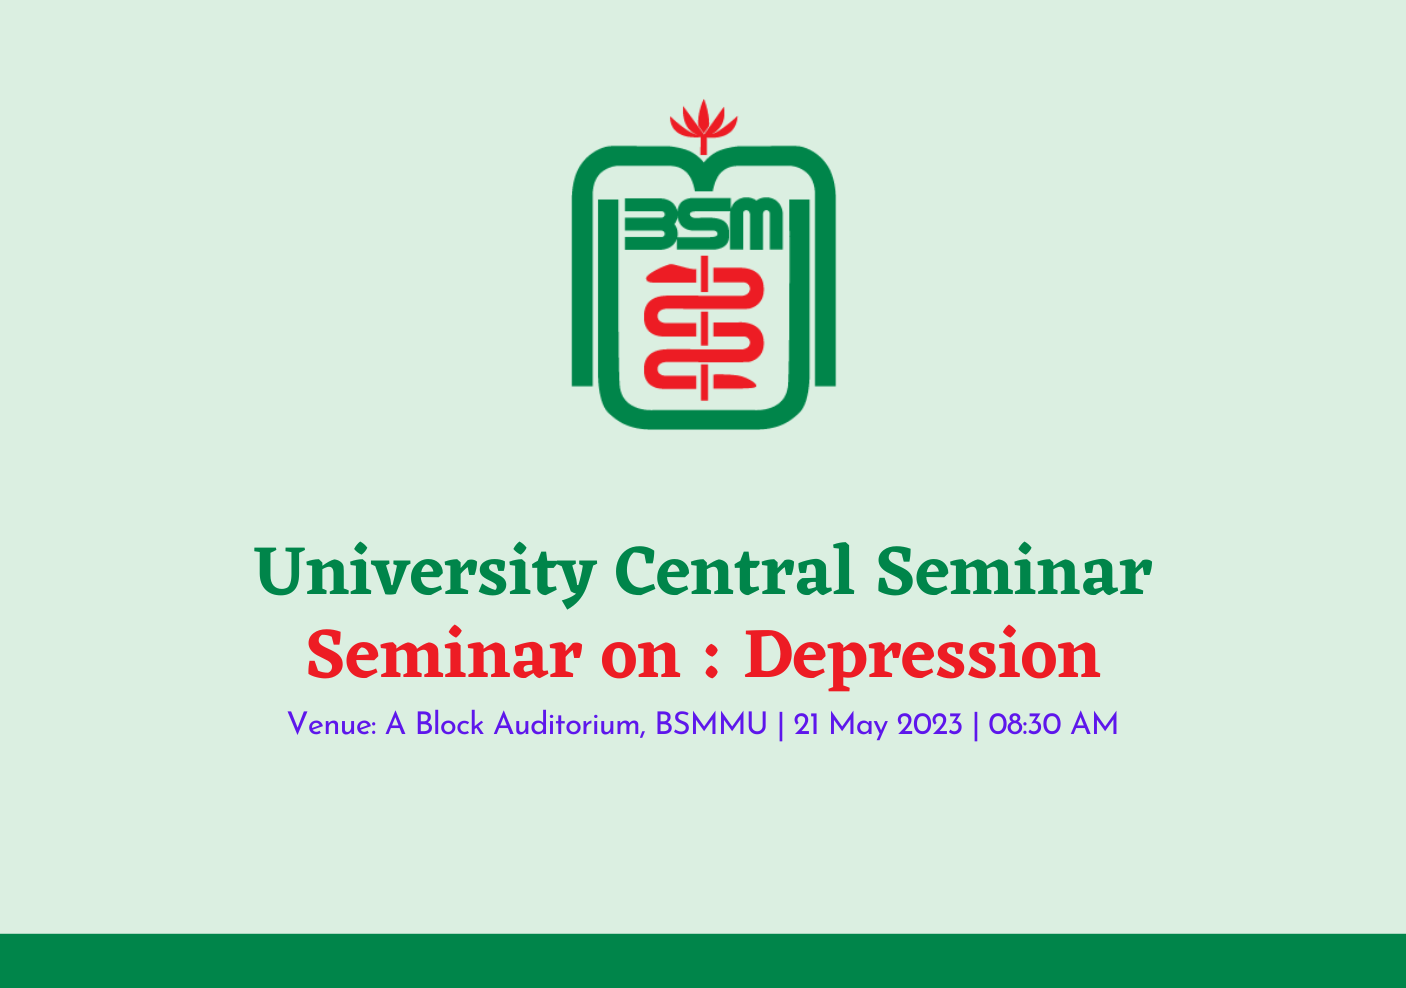 University Central Seminar on : Depression